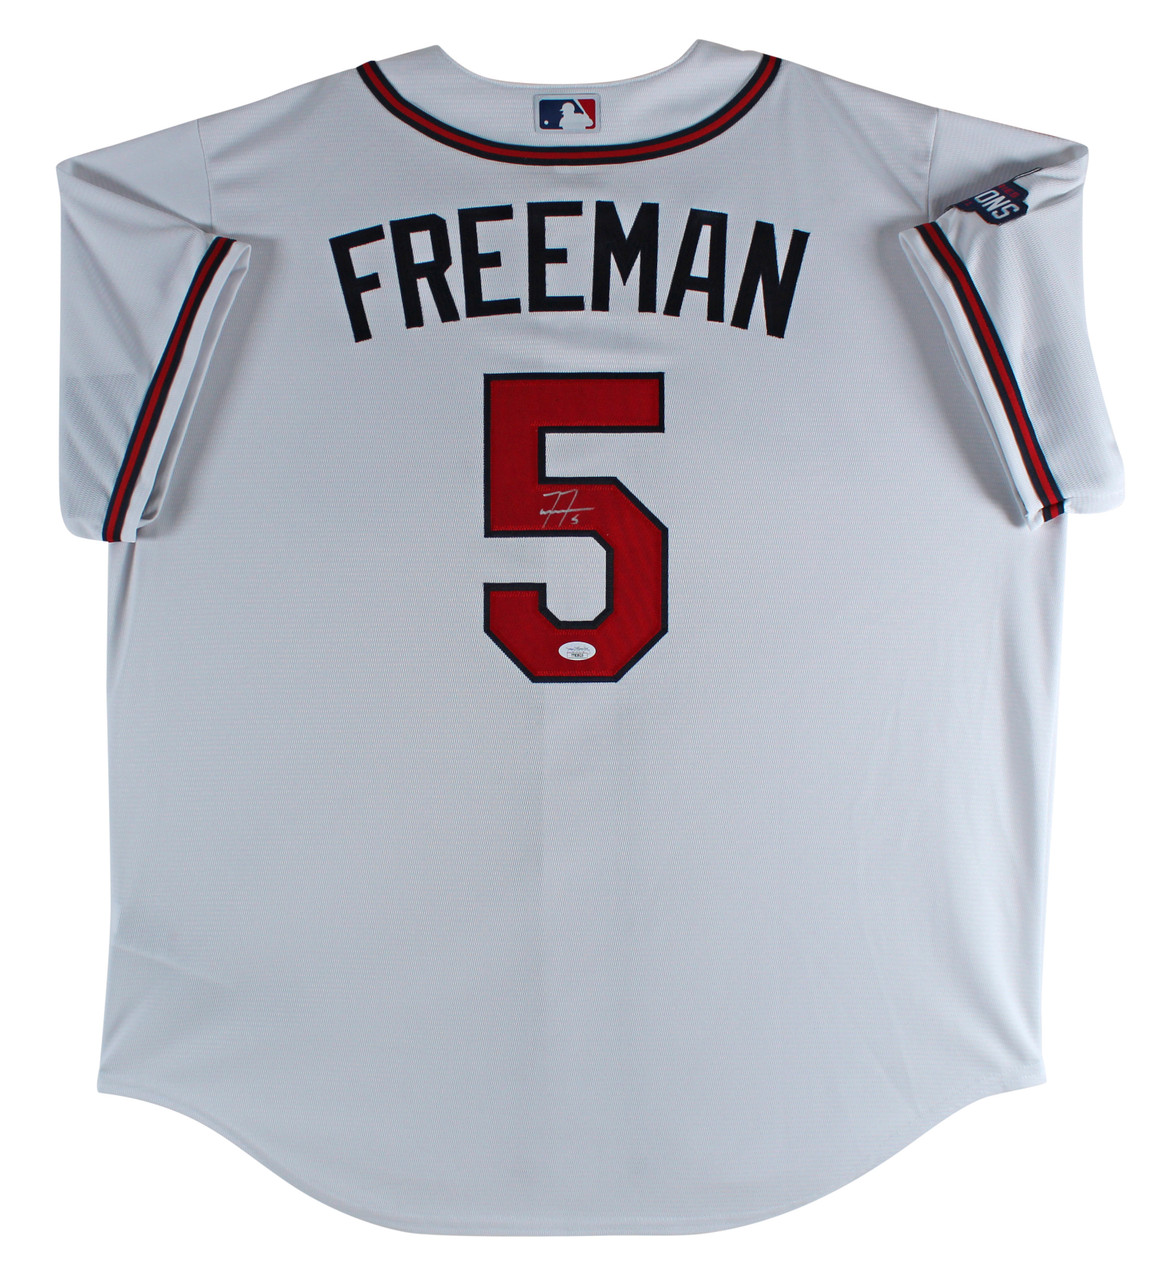 Atlanta Braves Freddie Freeman Autographed White Nike Jersey Size